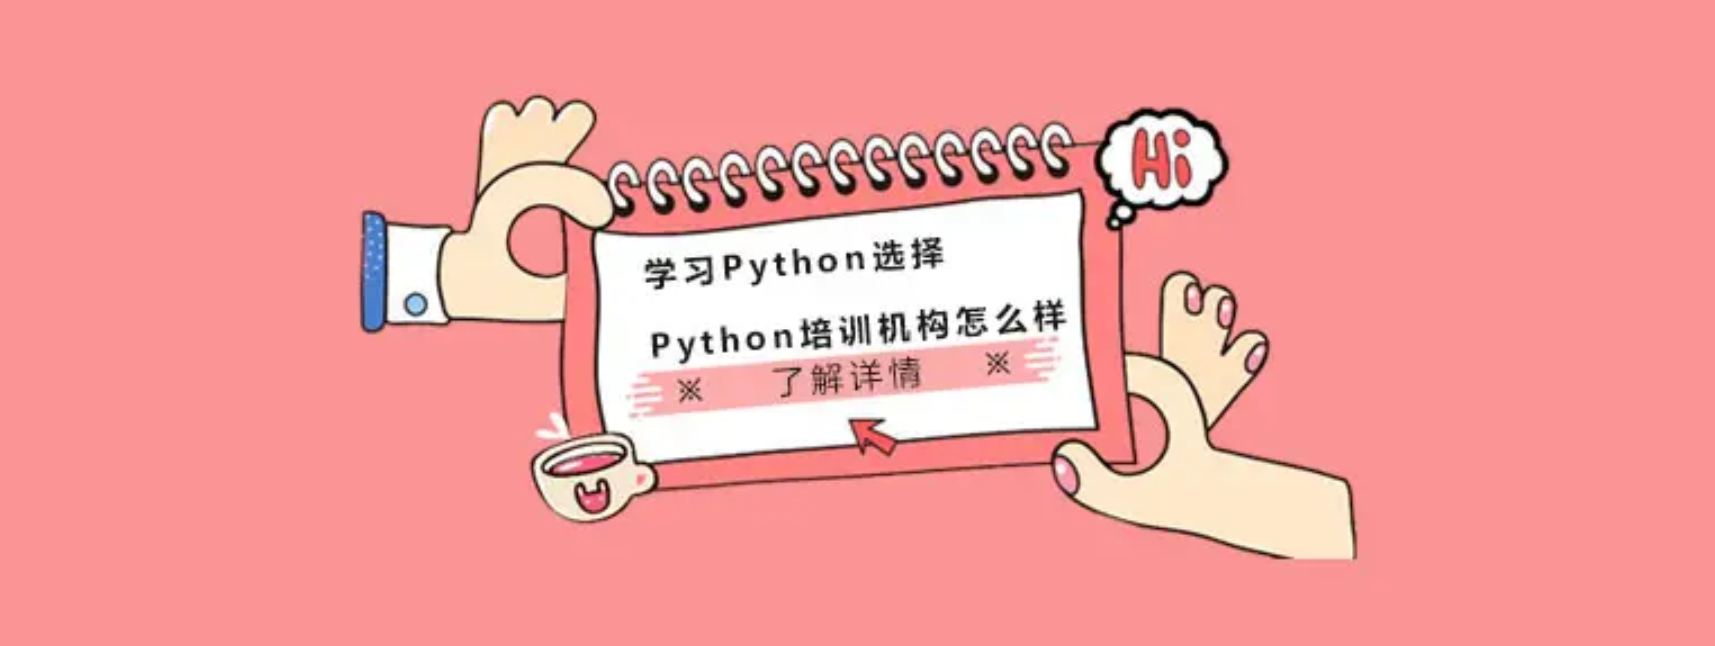 python编程培训机构